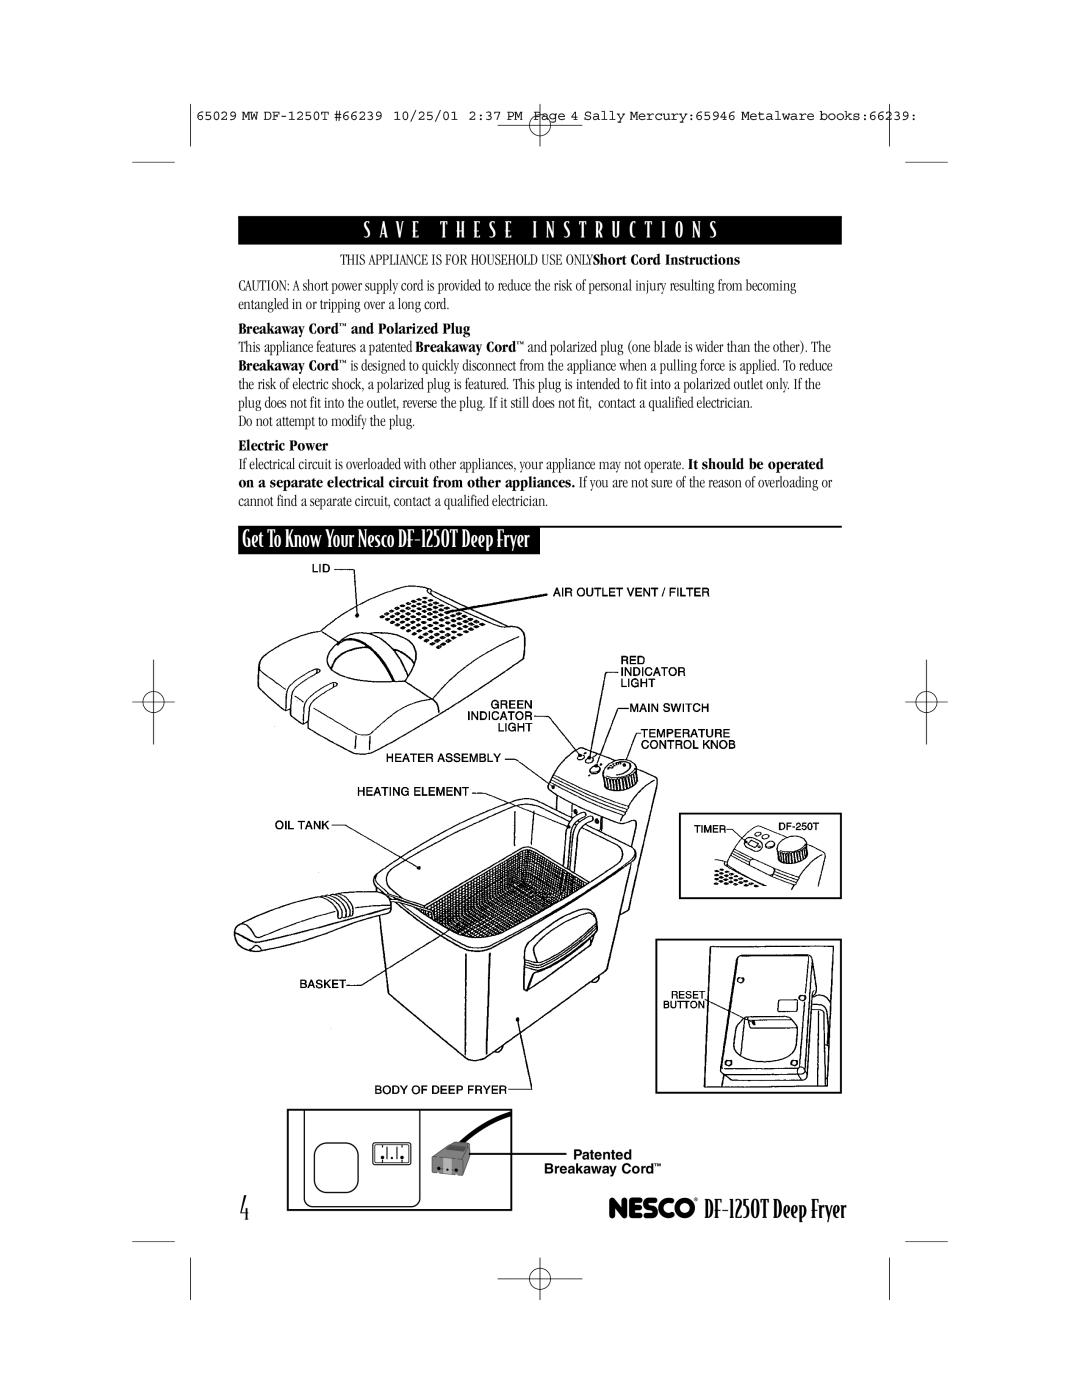 Nesco manual Get To Know Your Nesco DF-1250TDeep Fryer, Breakaway Cord and Polarized Plug, Electric Power 